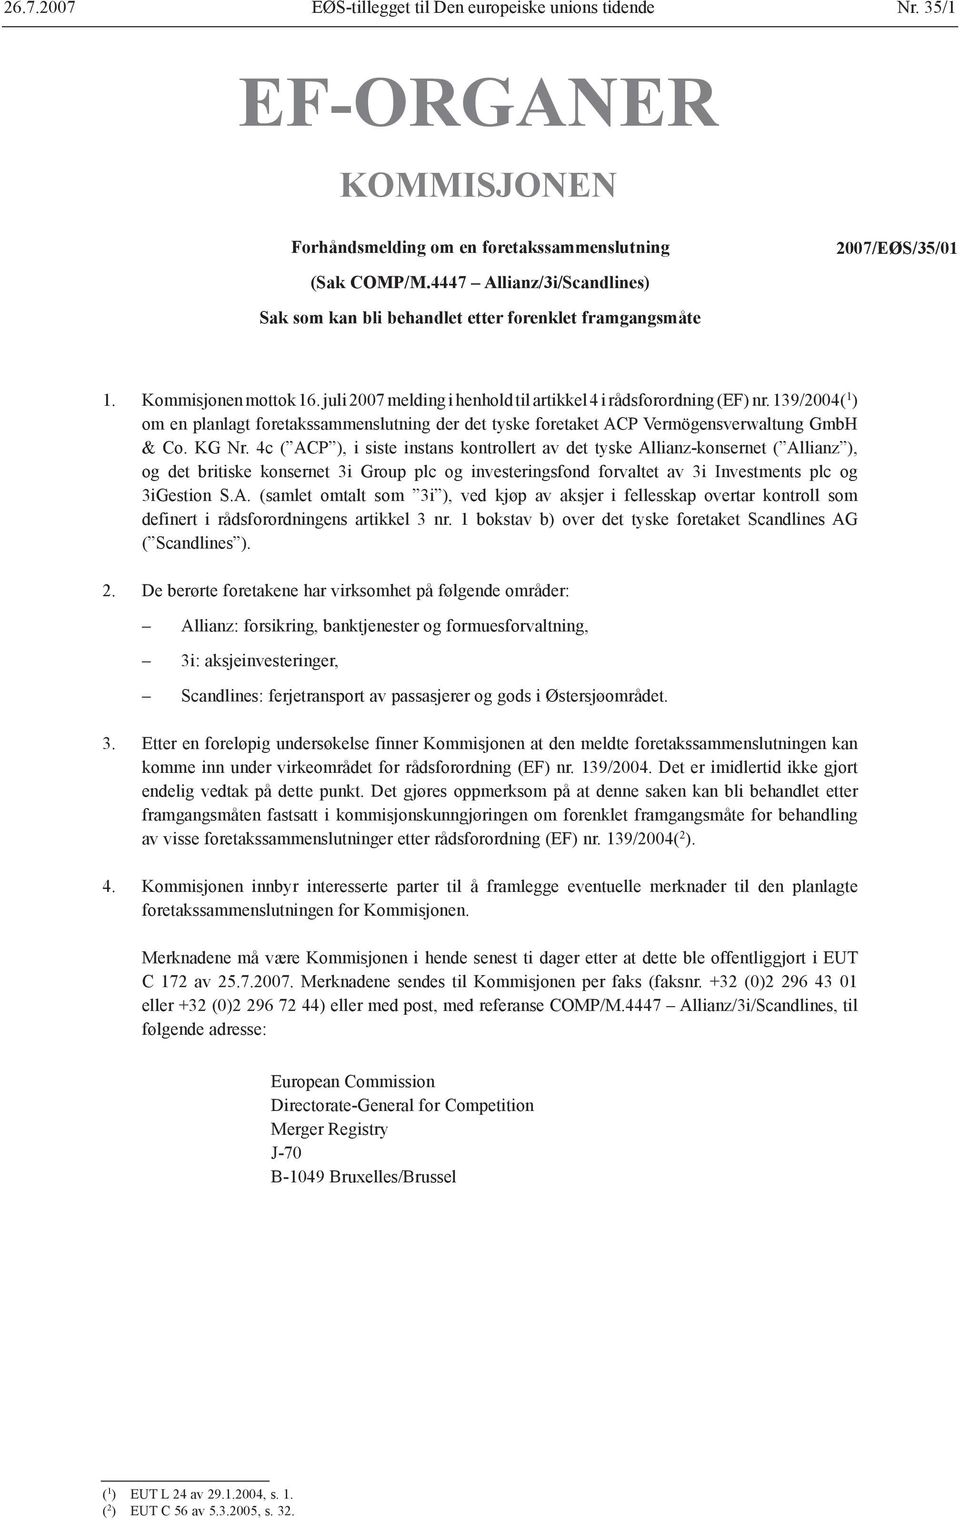 139/2004( 1 ) om en planlagt foretakssammenslutning der det tyske foretaket ACP Vermögensverwaltung GmbH & Co. KG Nr.